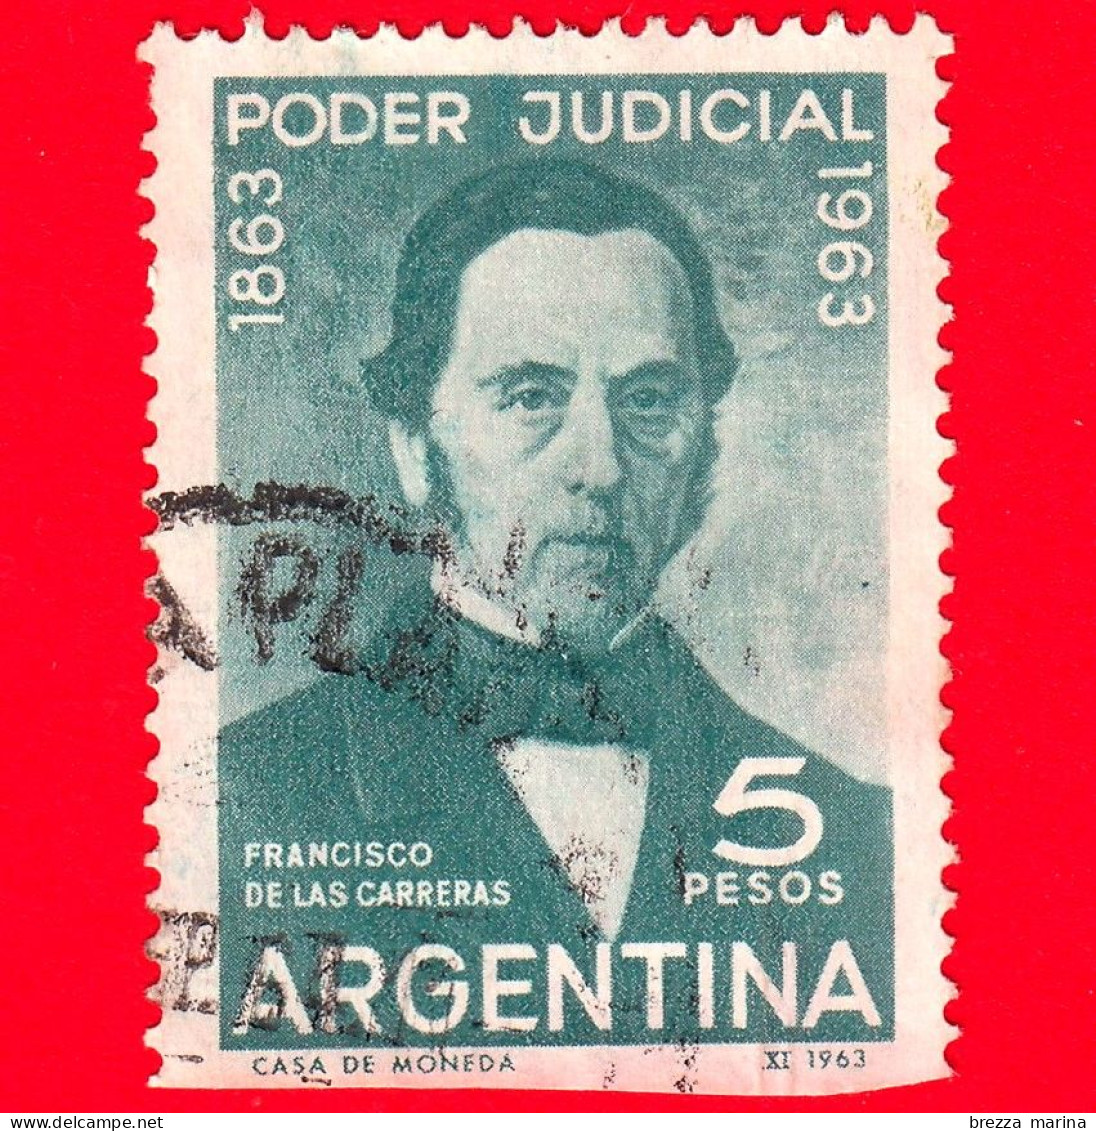 ARGENTINA - Usato - 1963 - Centenario Della Magistratura Argentina - F. De Las Carreras - 5 - Vedi ... - Gebruikt